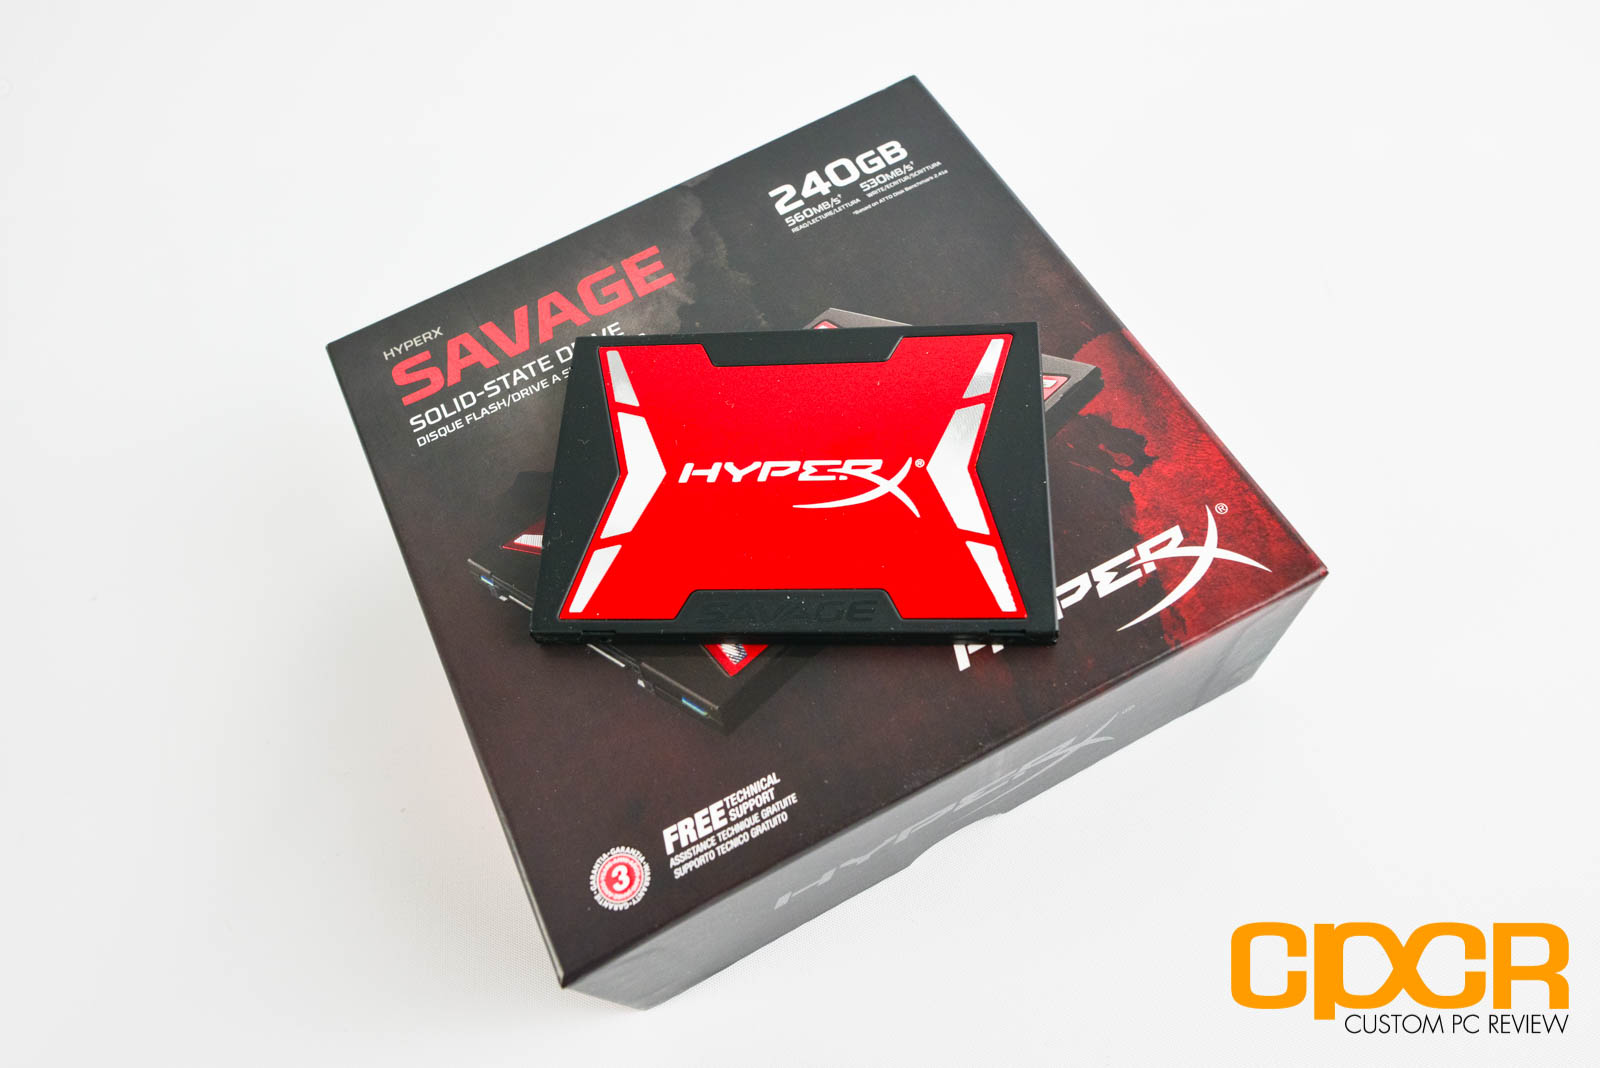 Halloween glide meditativ Review: Kingston HyperX Savage 240GB SSD | Custom PC Review